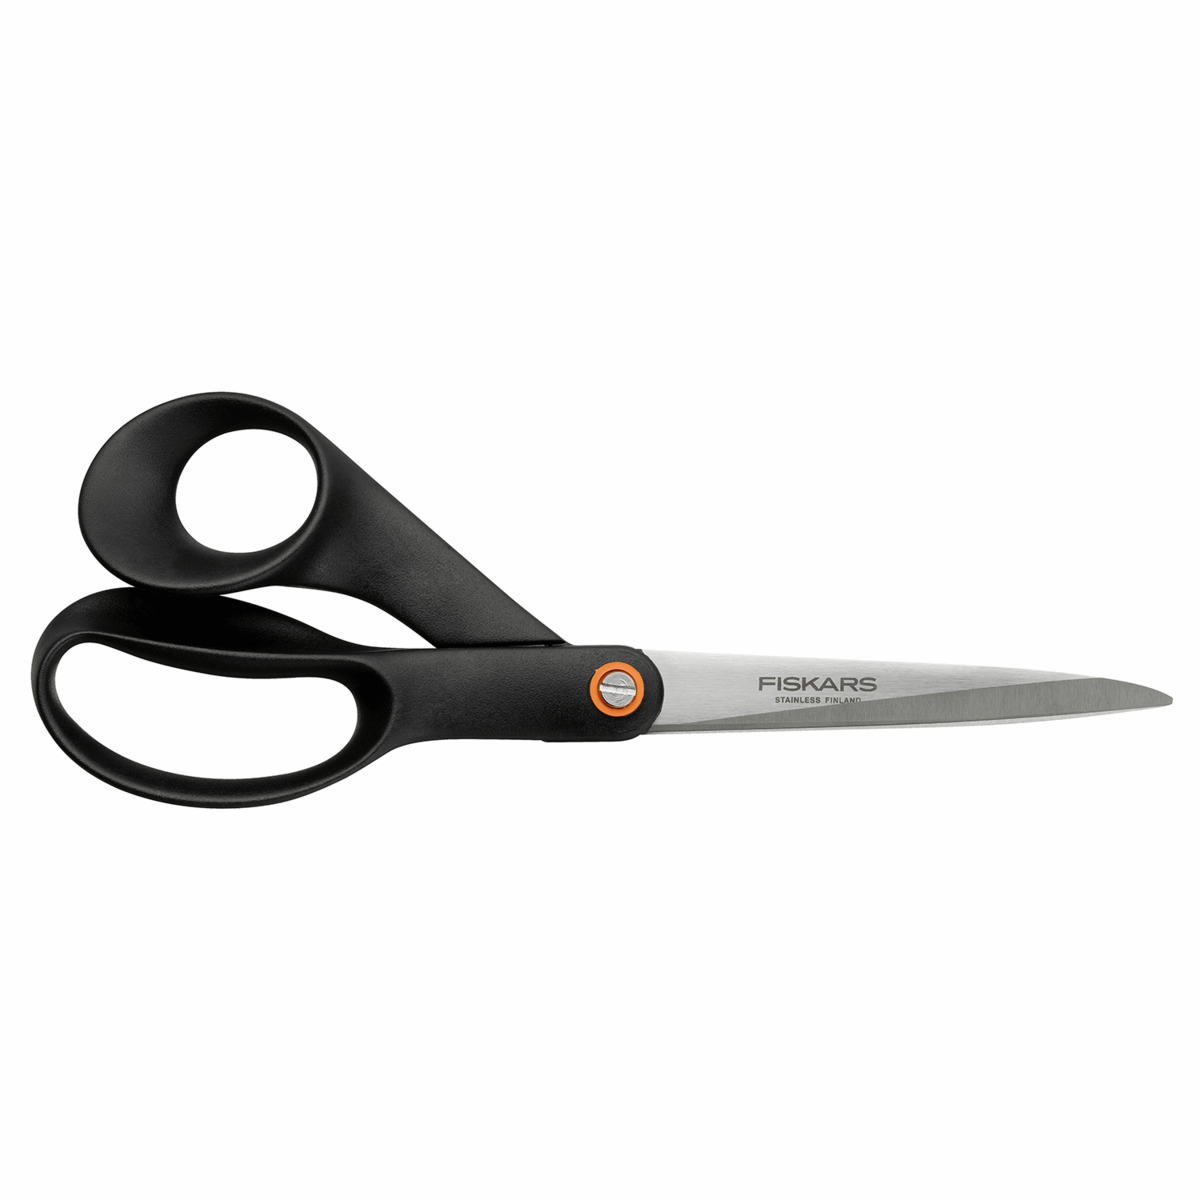 Fiskars General Purpose: Functional Form Scissors - Black: 21cm/8.25in * May Offer *